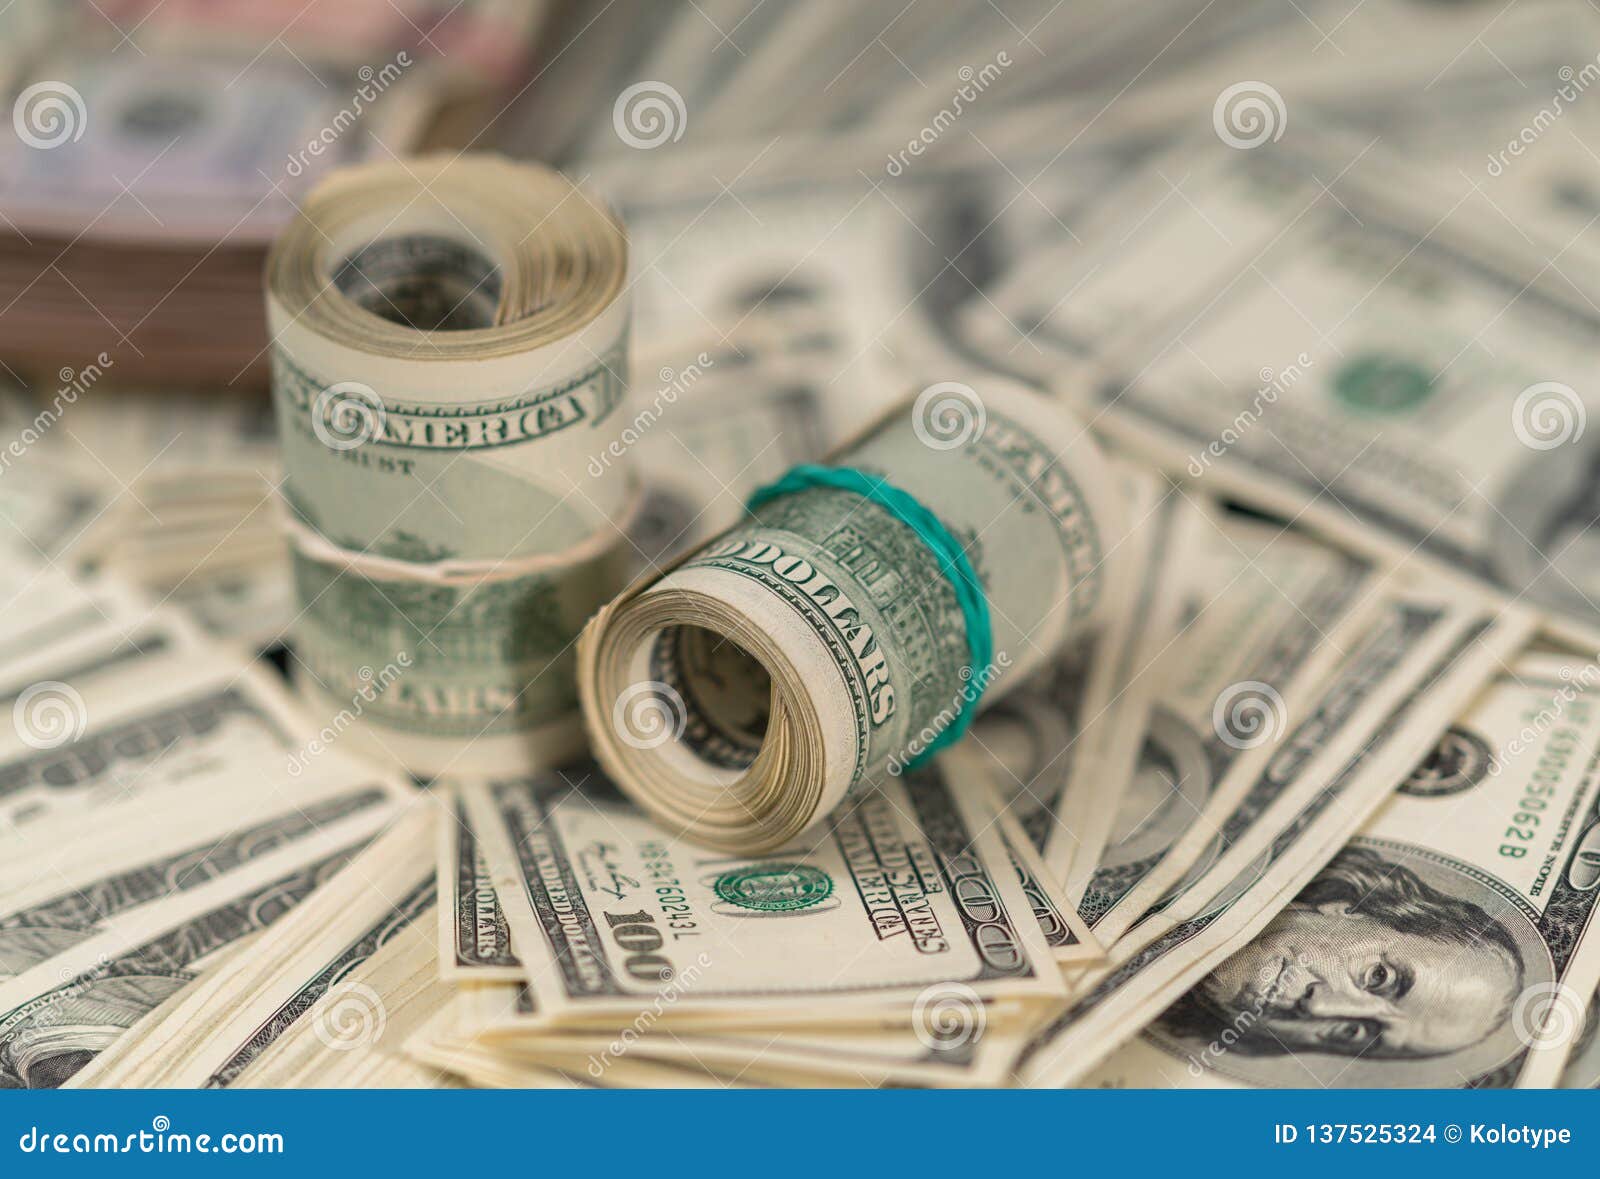 rolls of 100 dollar bills on piles of money